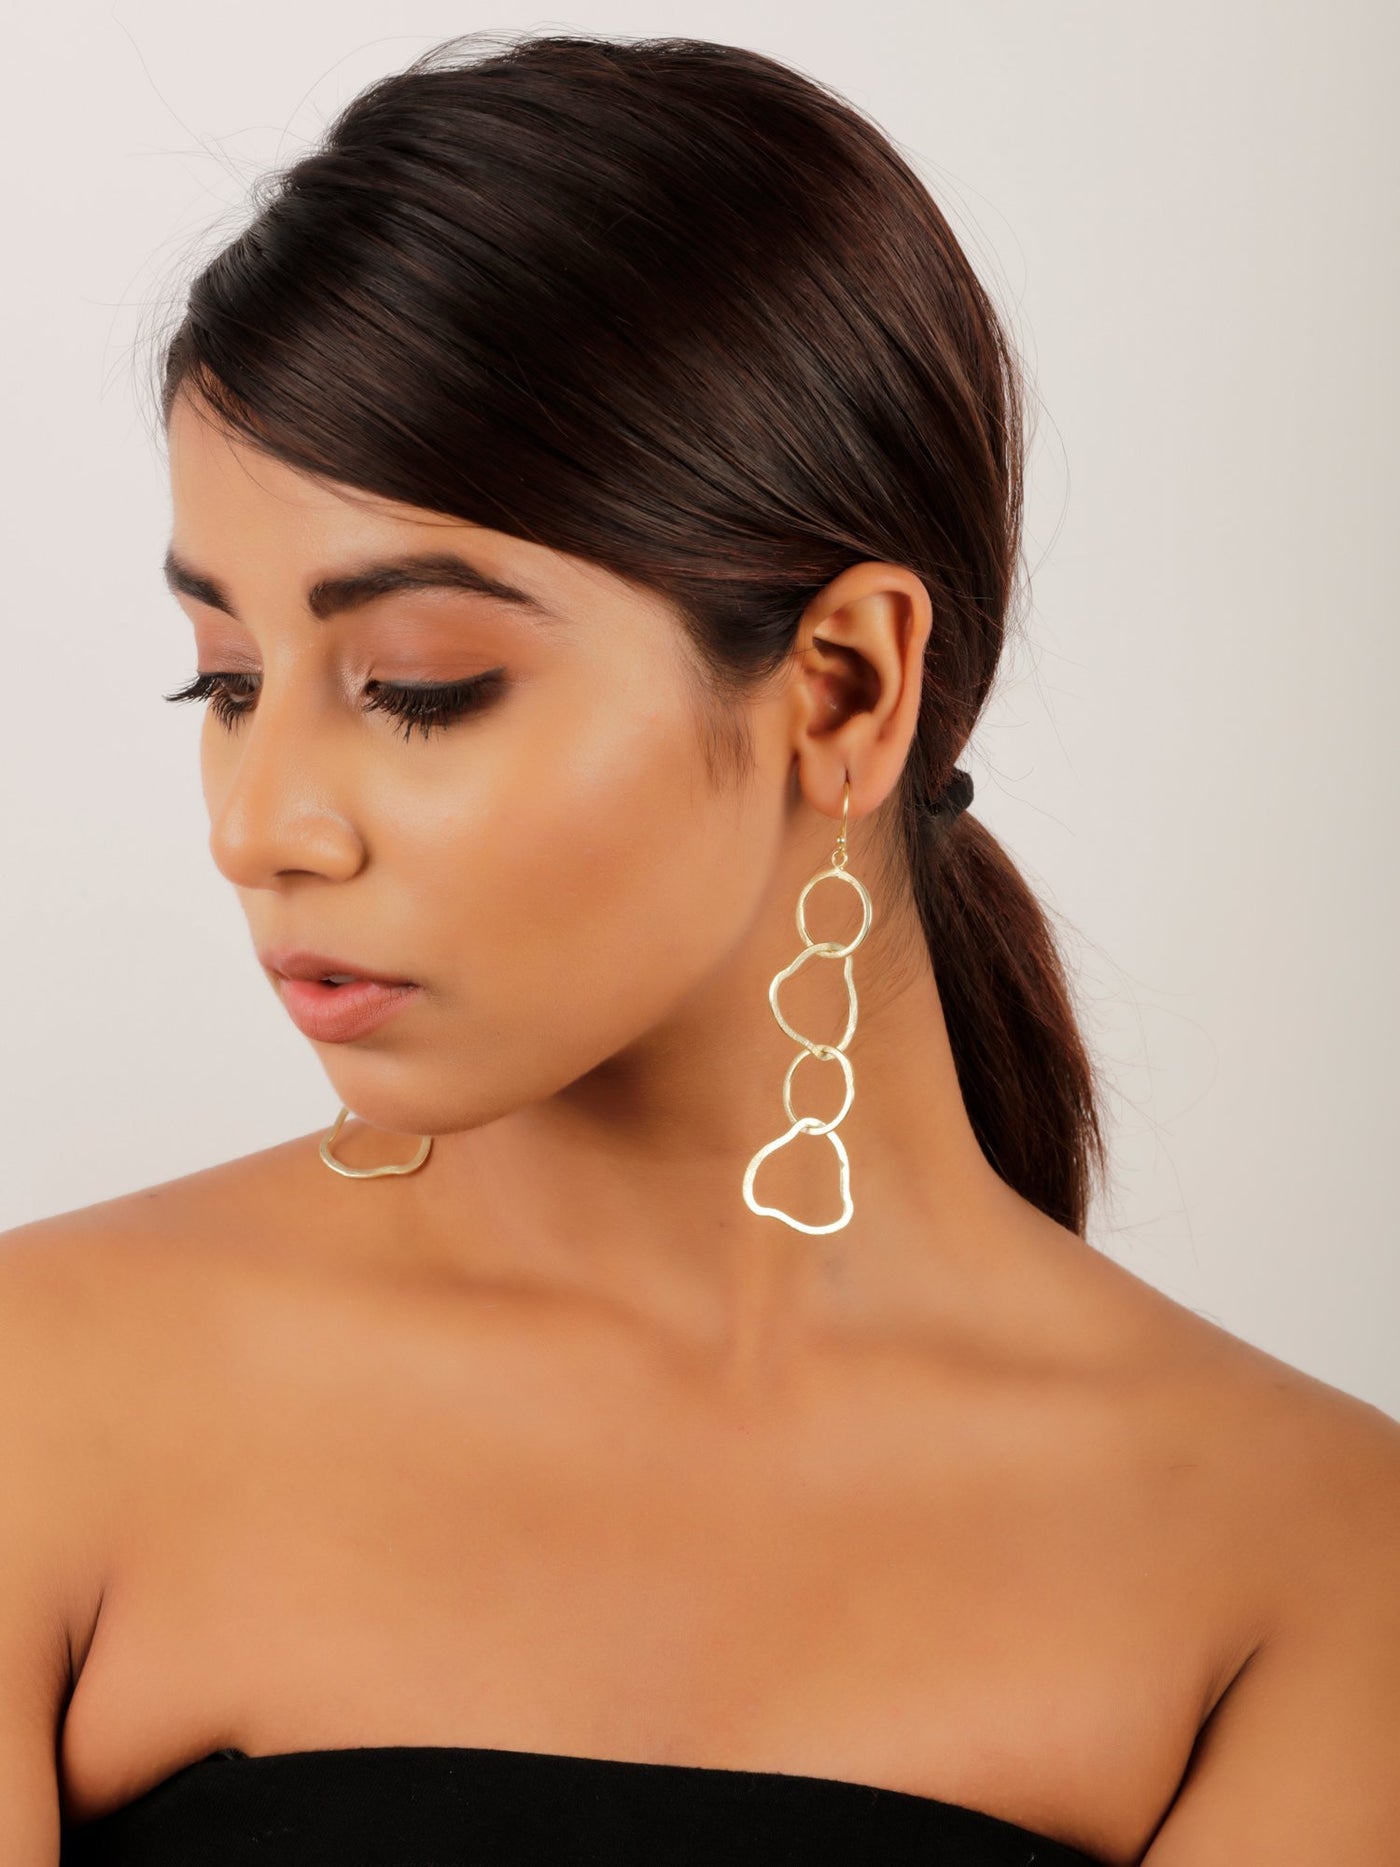 Charming Chunky Interlinked Gold Earrings - Stilskii